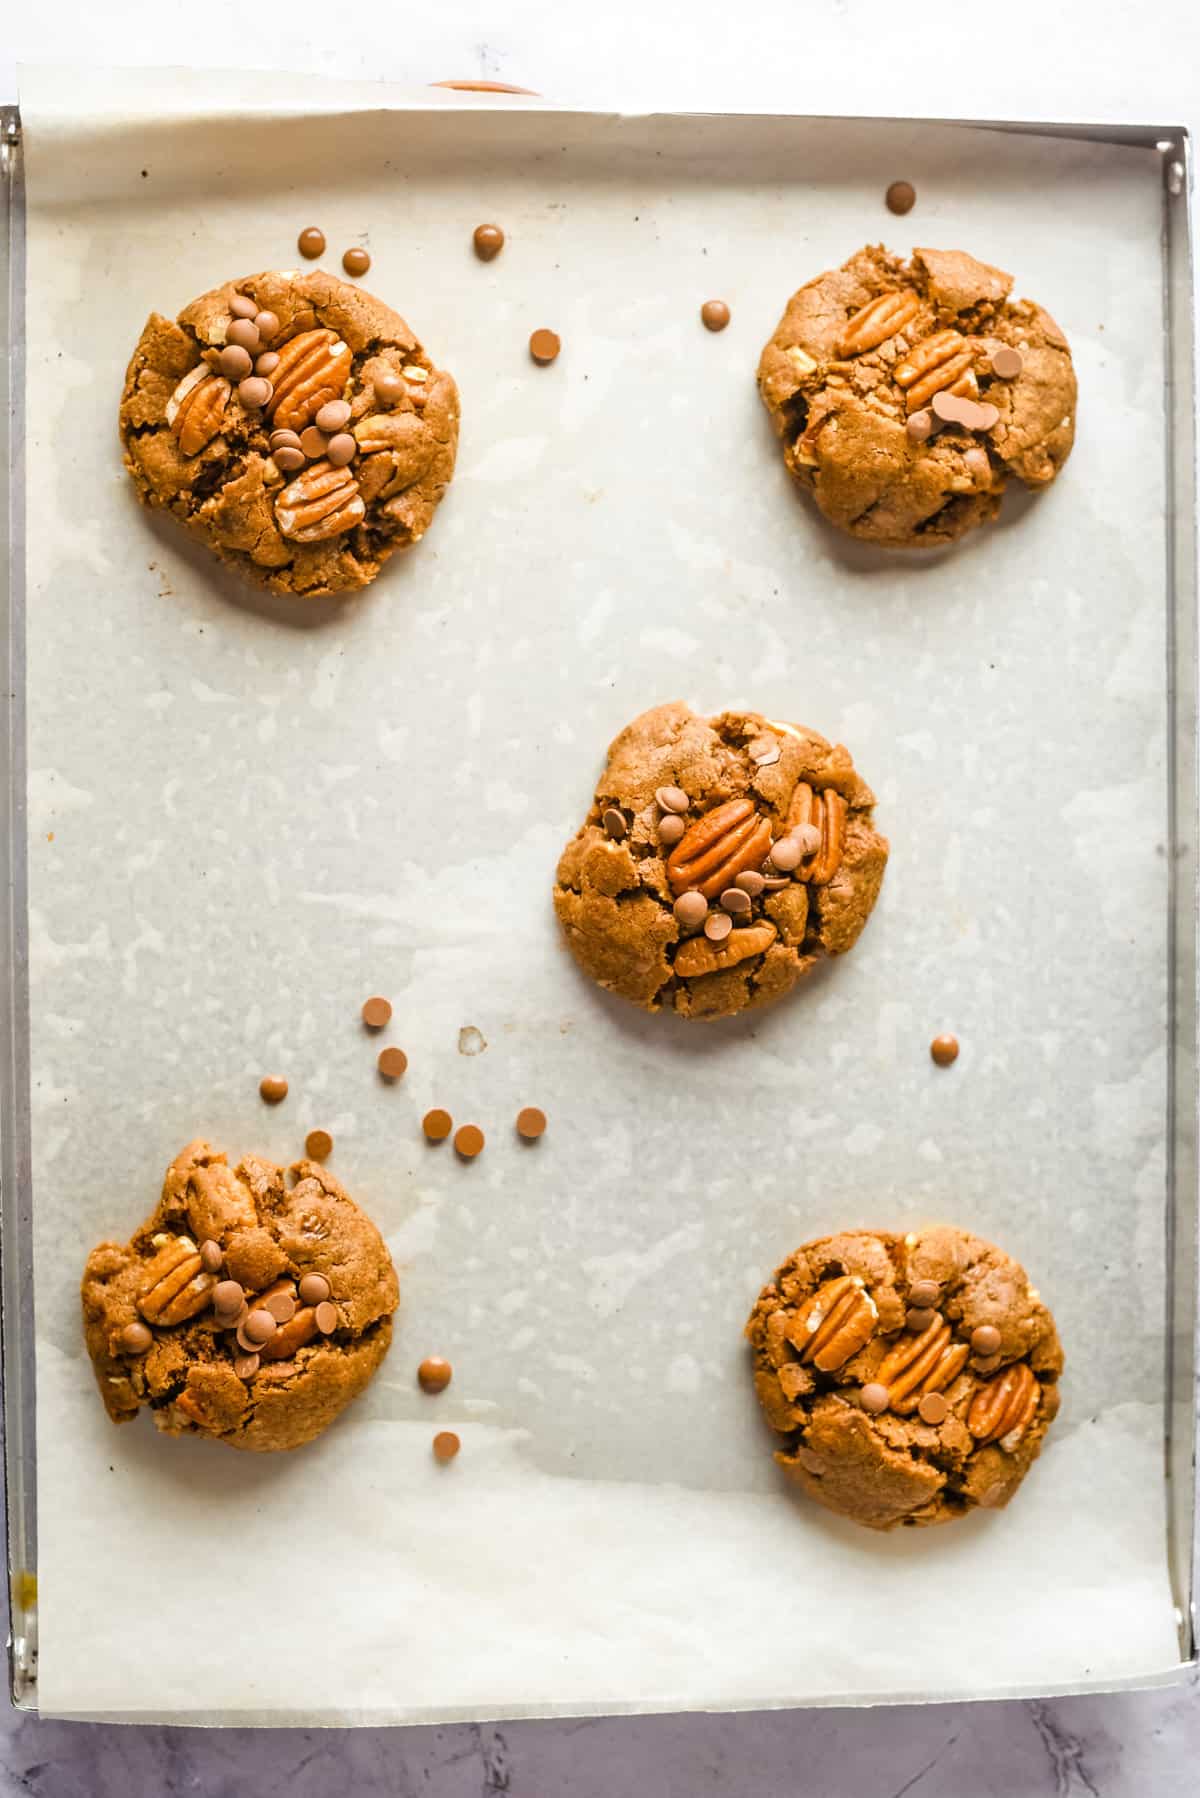 Overhead view of baked pecan chocolate chip cookies.